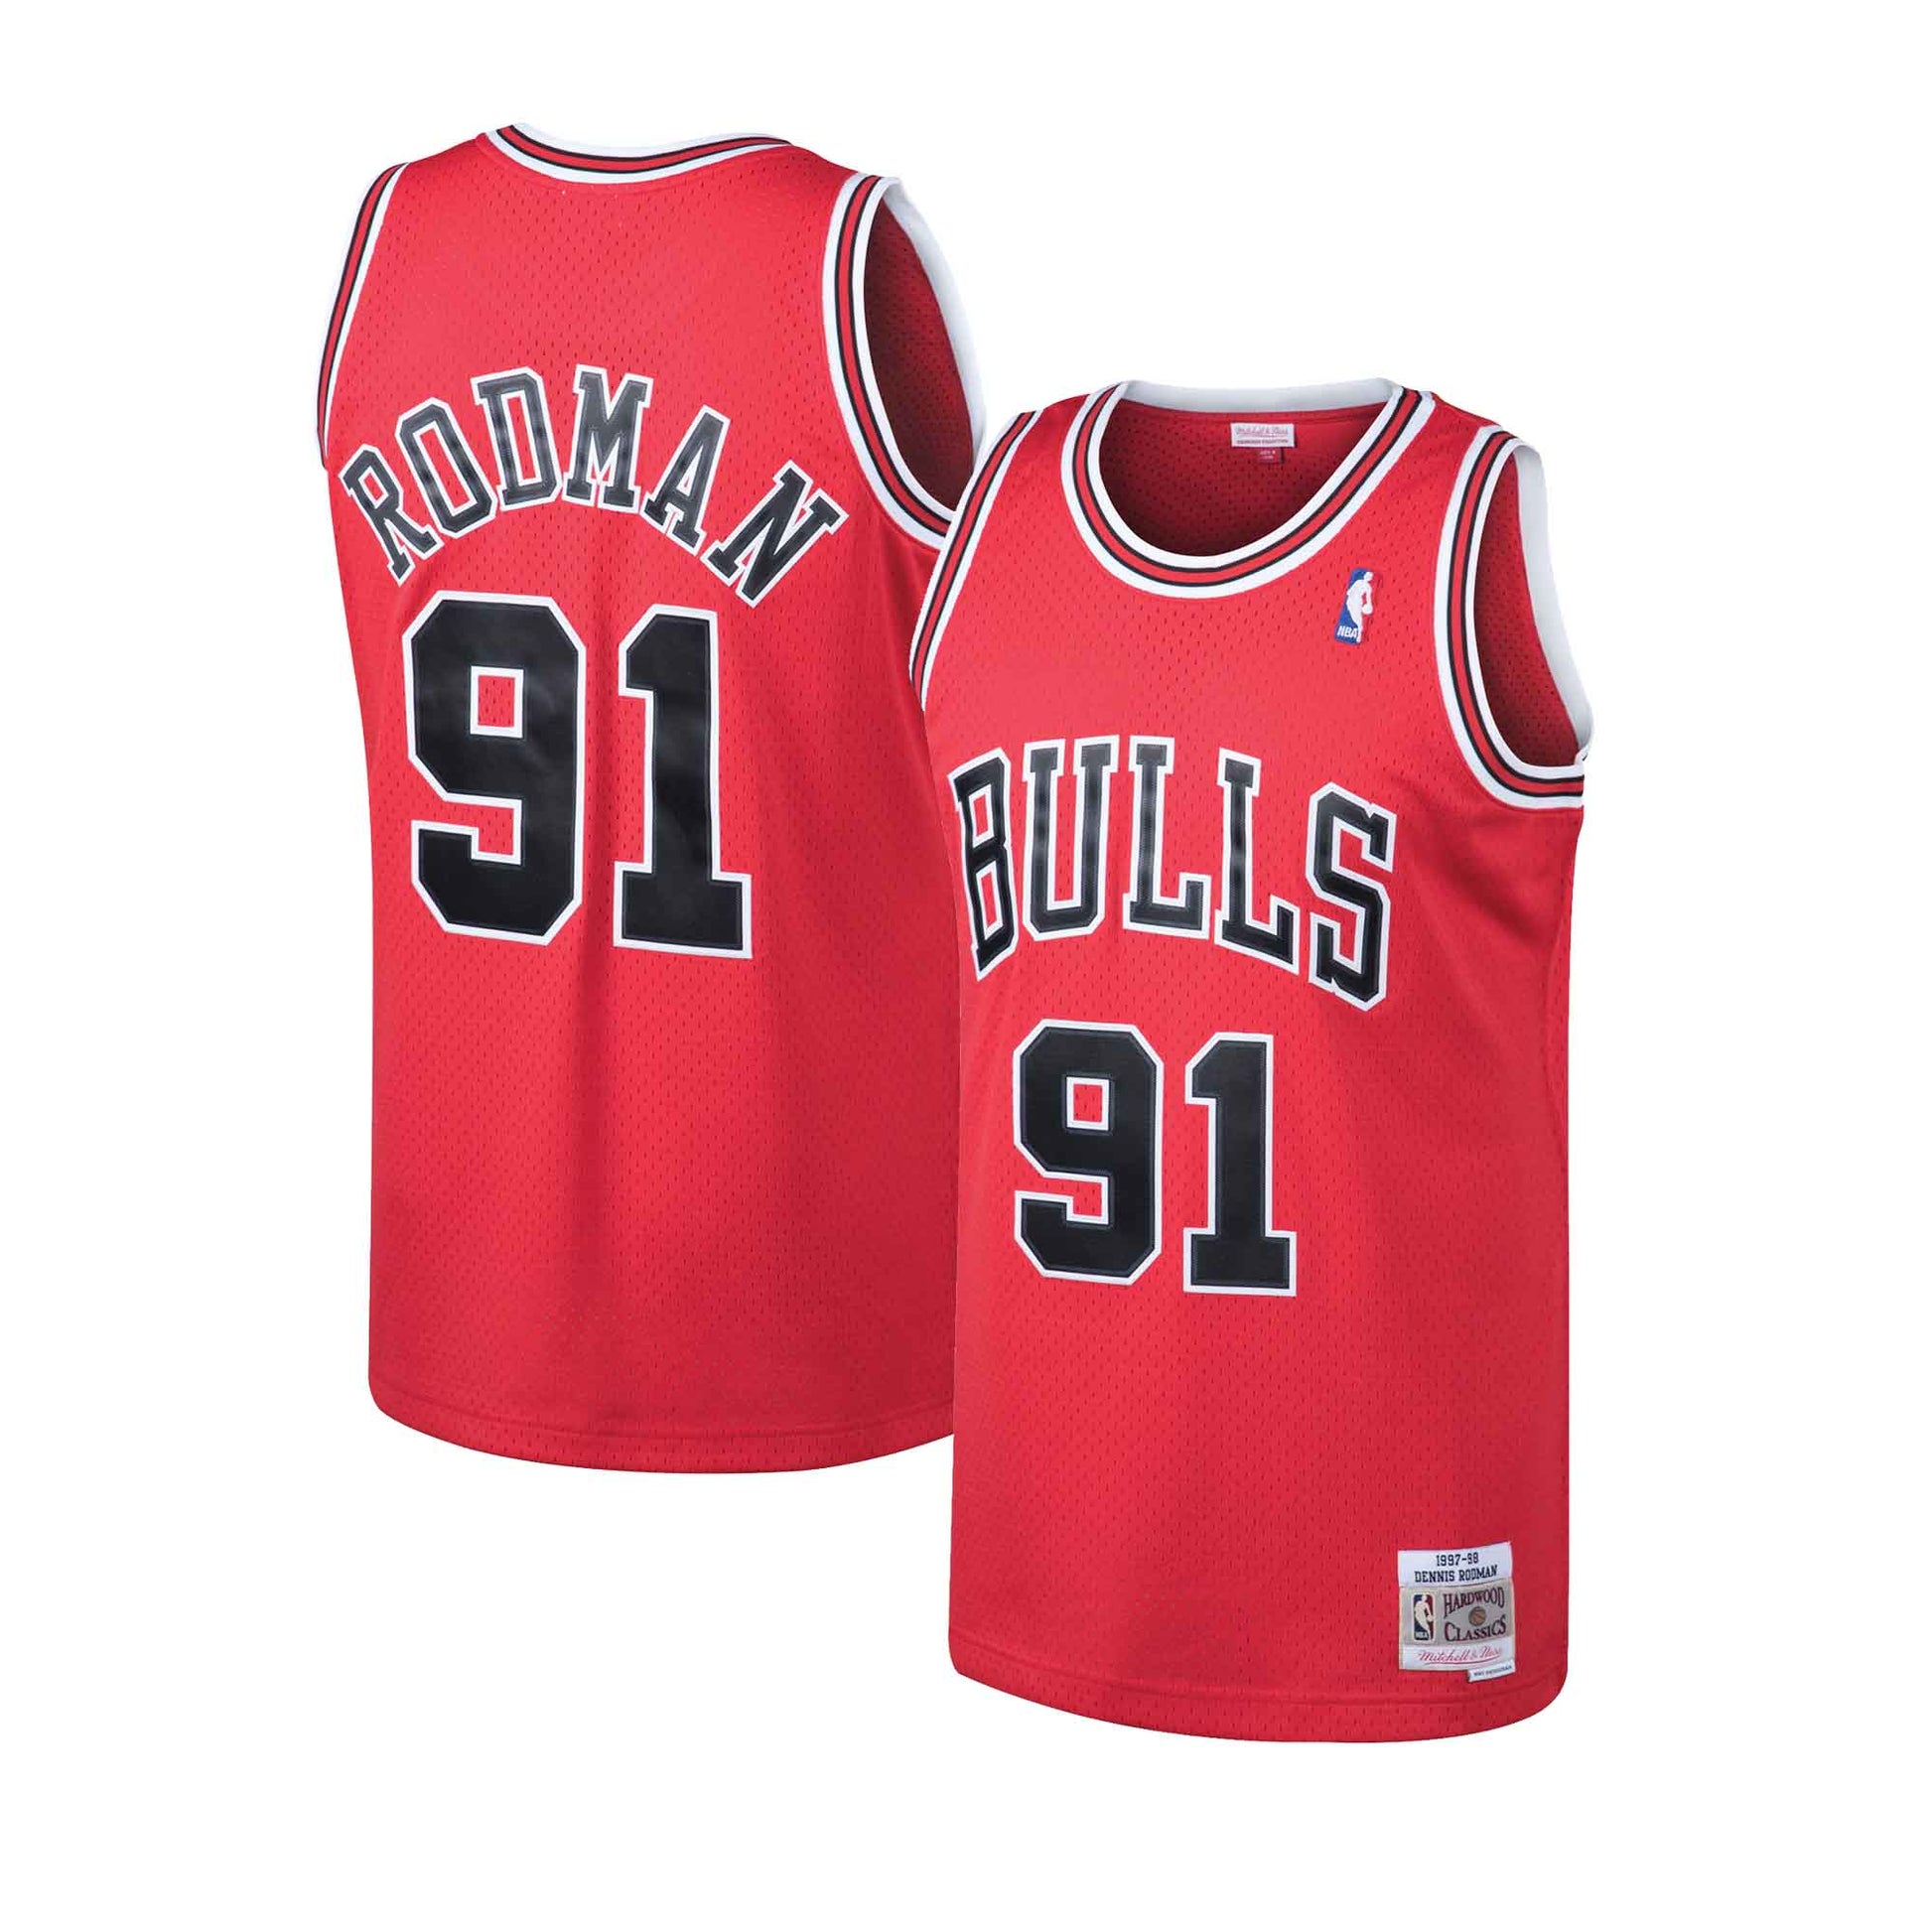 Dennis Rodman 91 Chicago Bulls 1997-98 Mitchell & Ness Swingman Jersey 